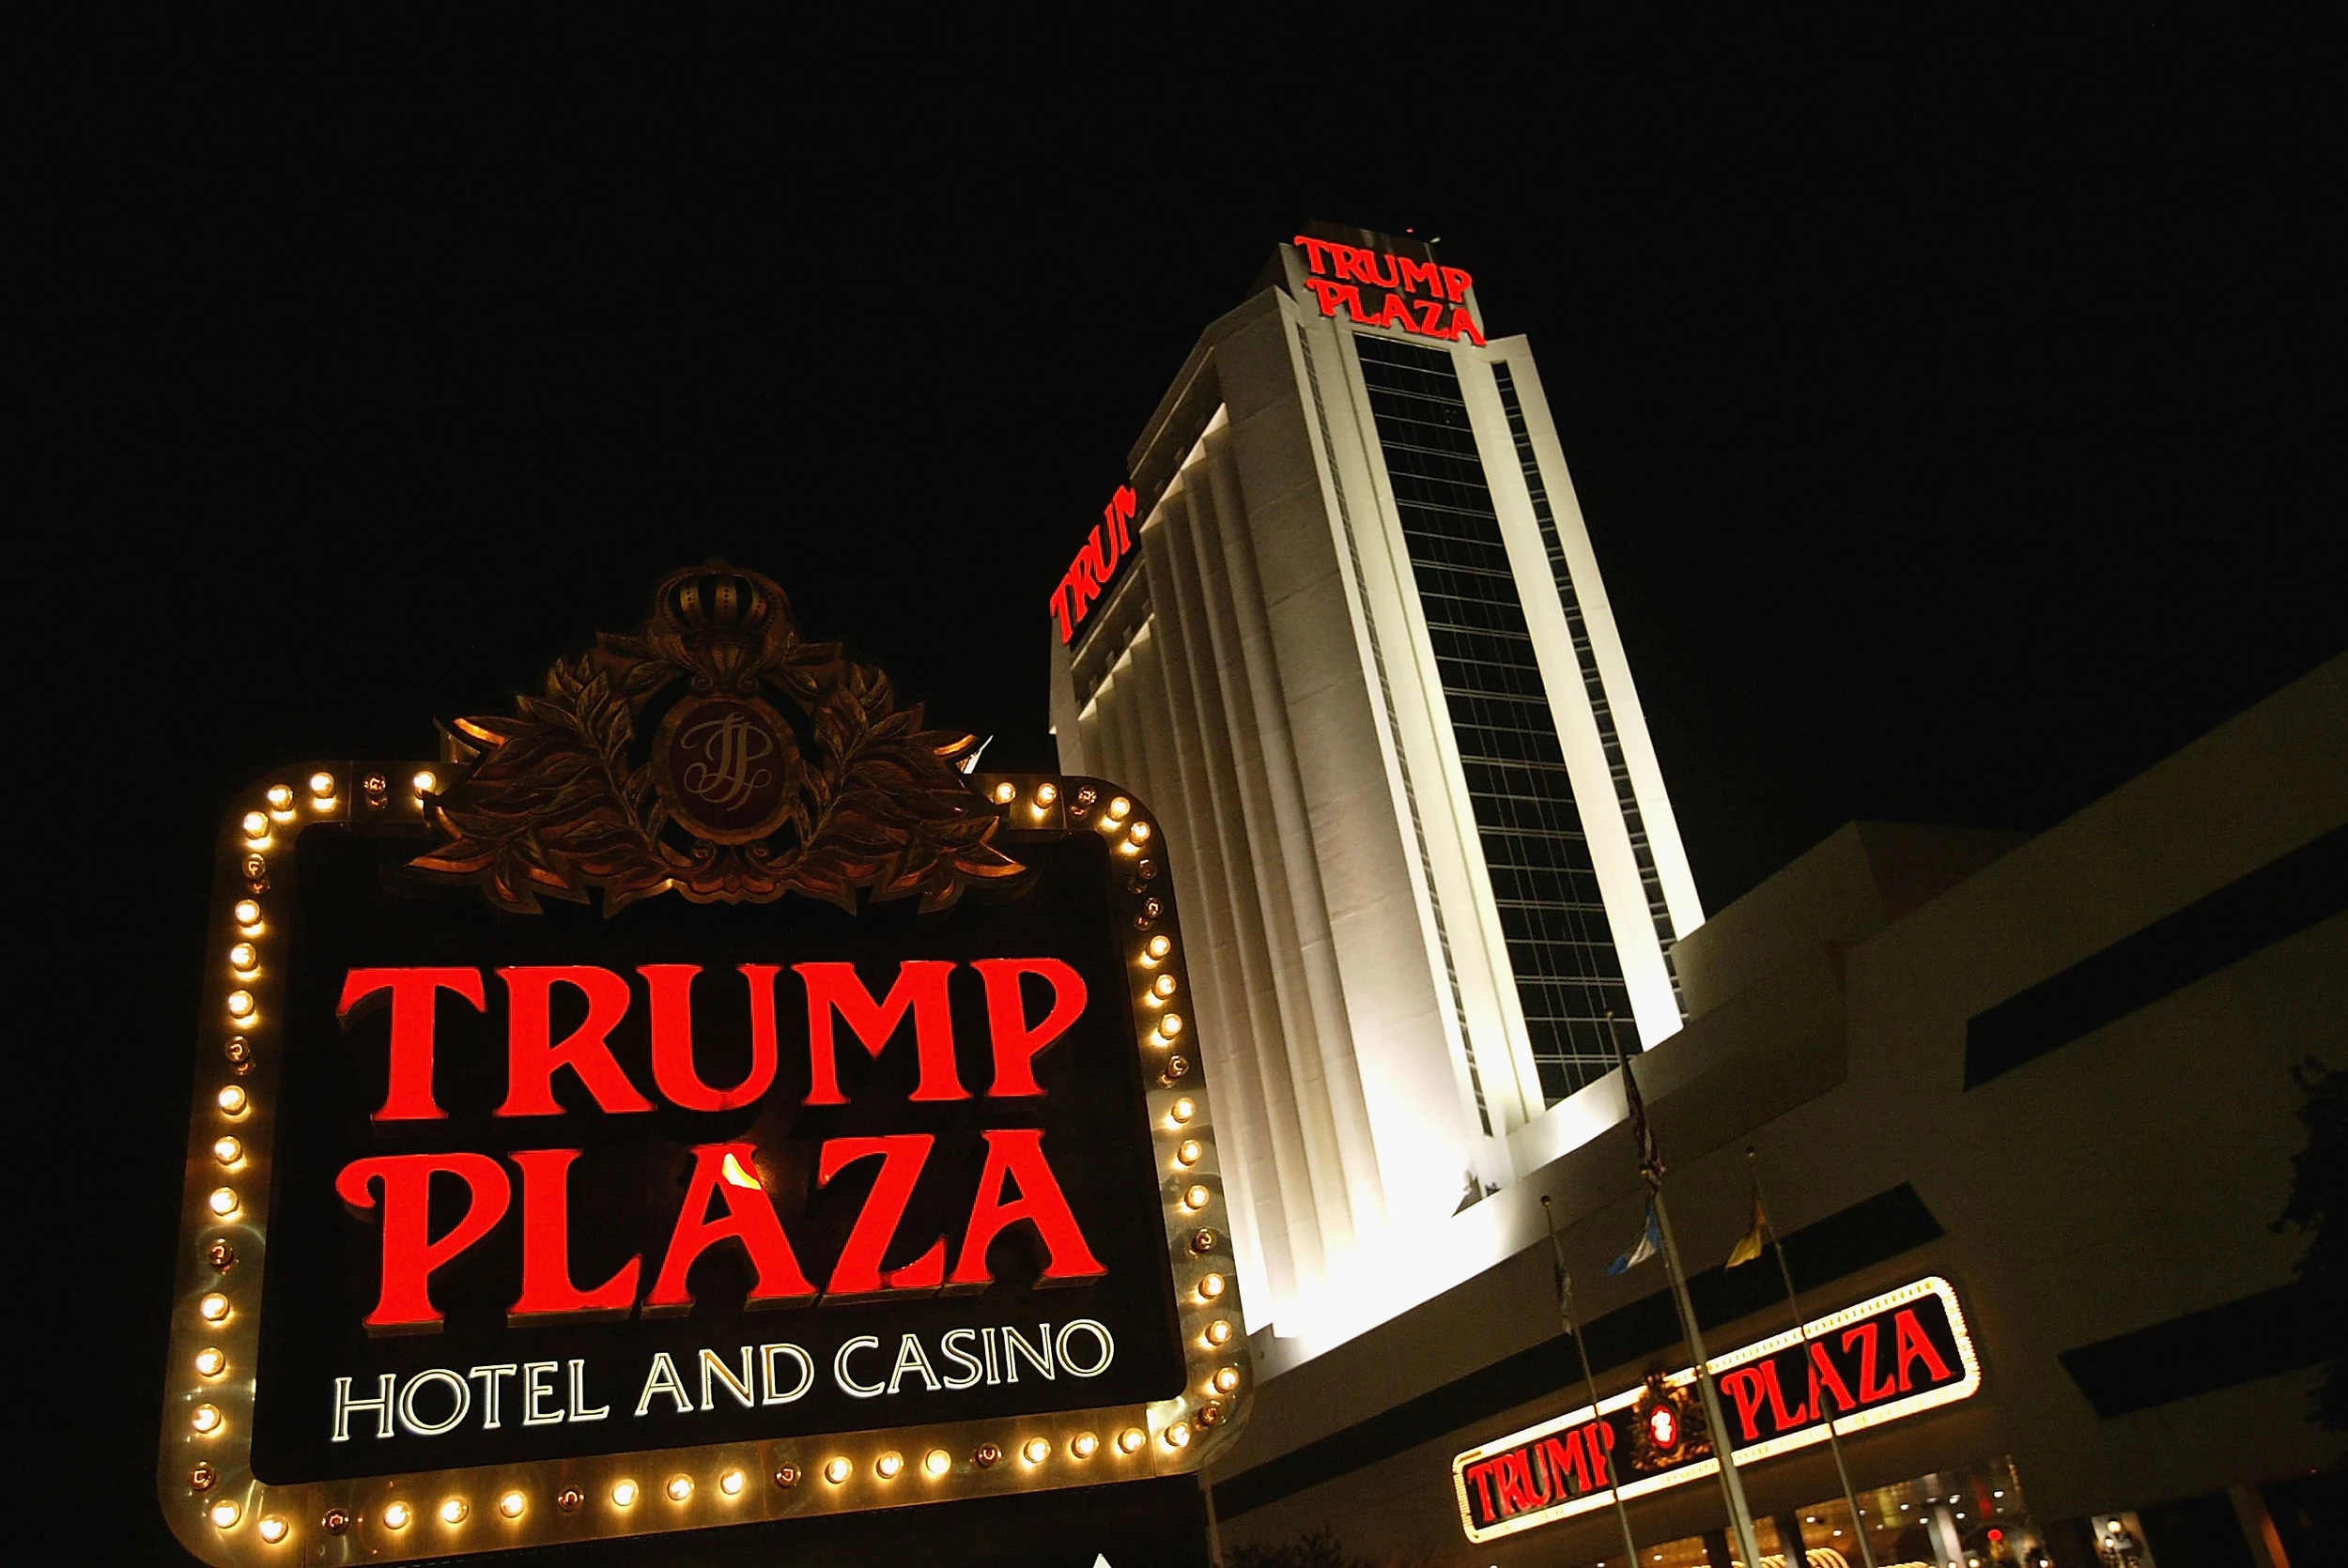 Demolition has begun on the Trump Plaza Casino in Atlantic City